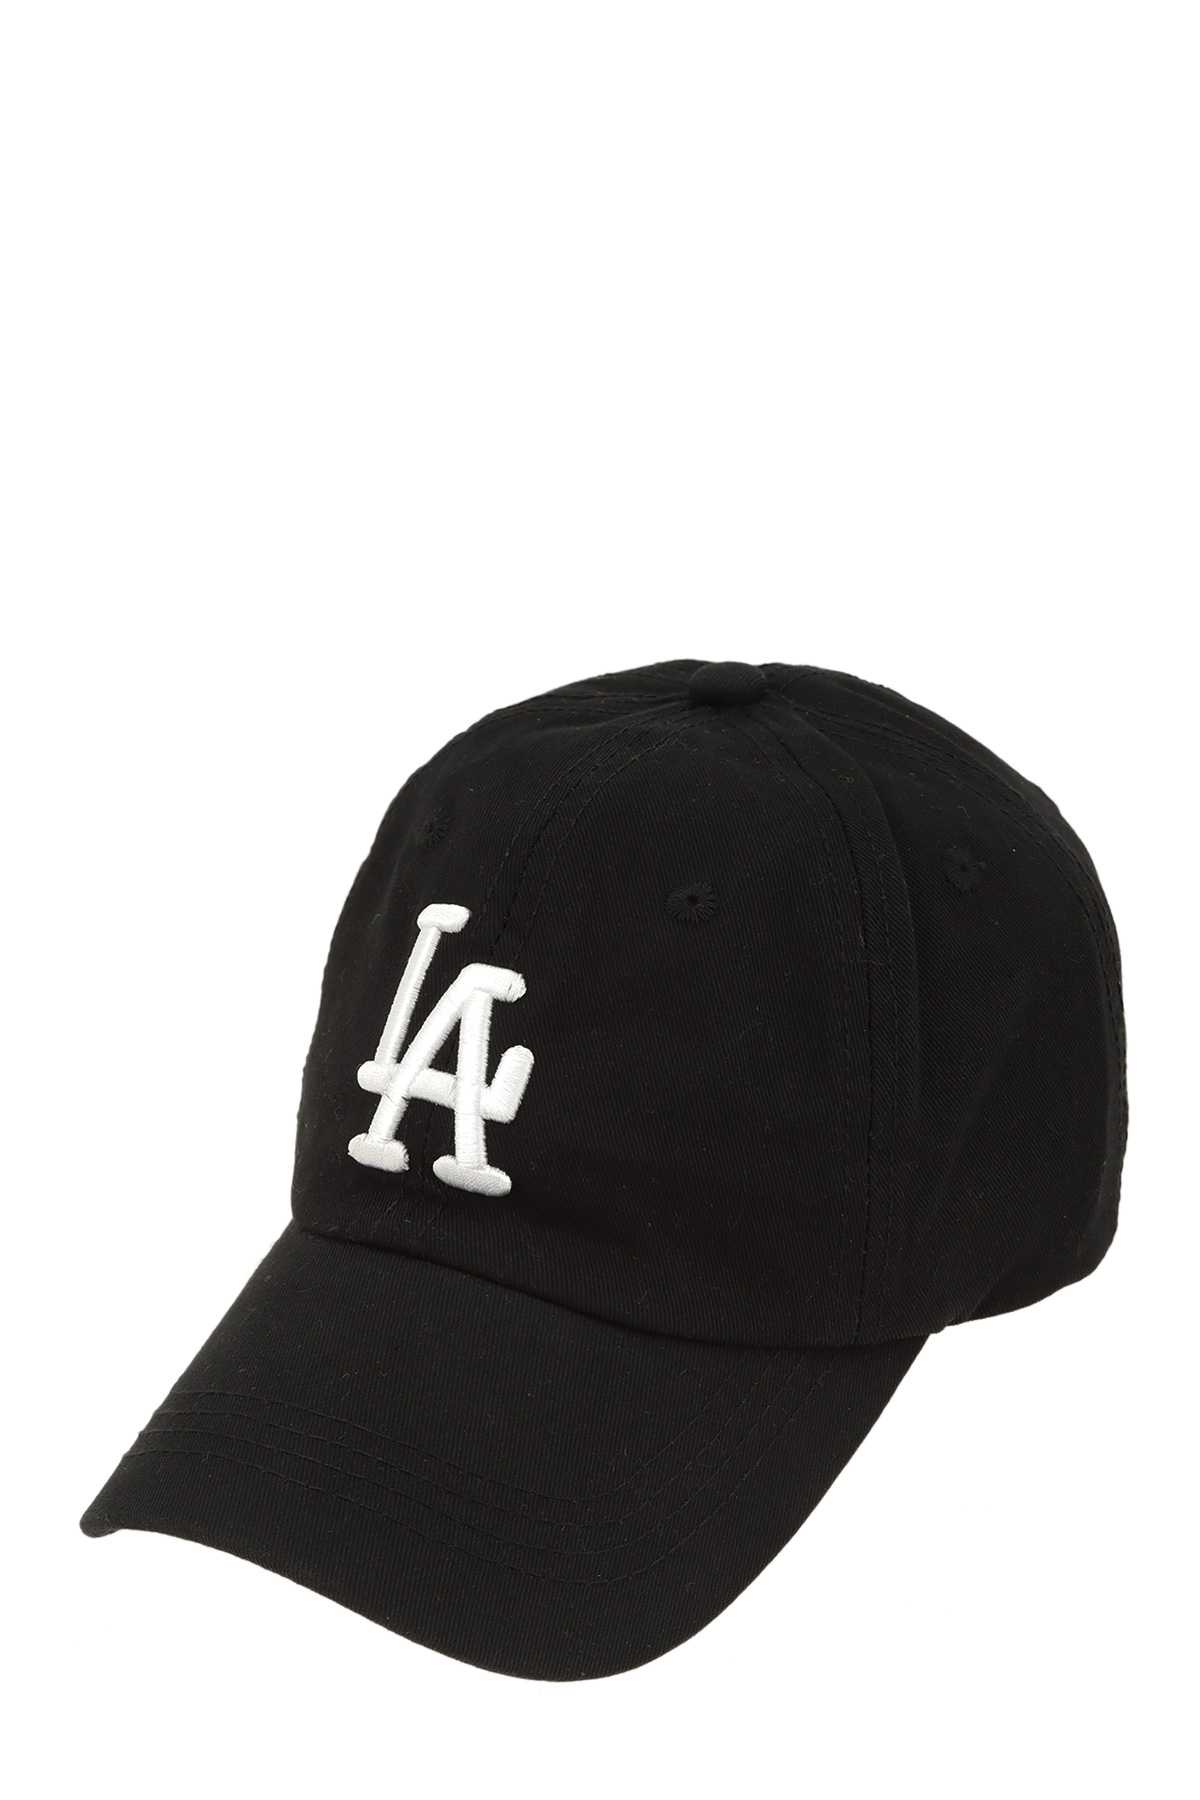 LA 3D Embroidery Cotton Baseball Cap